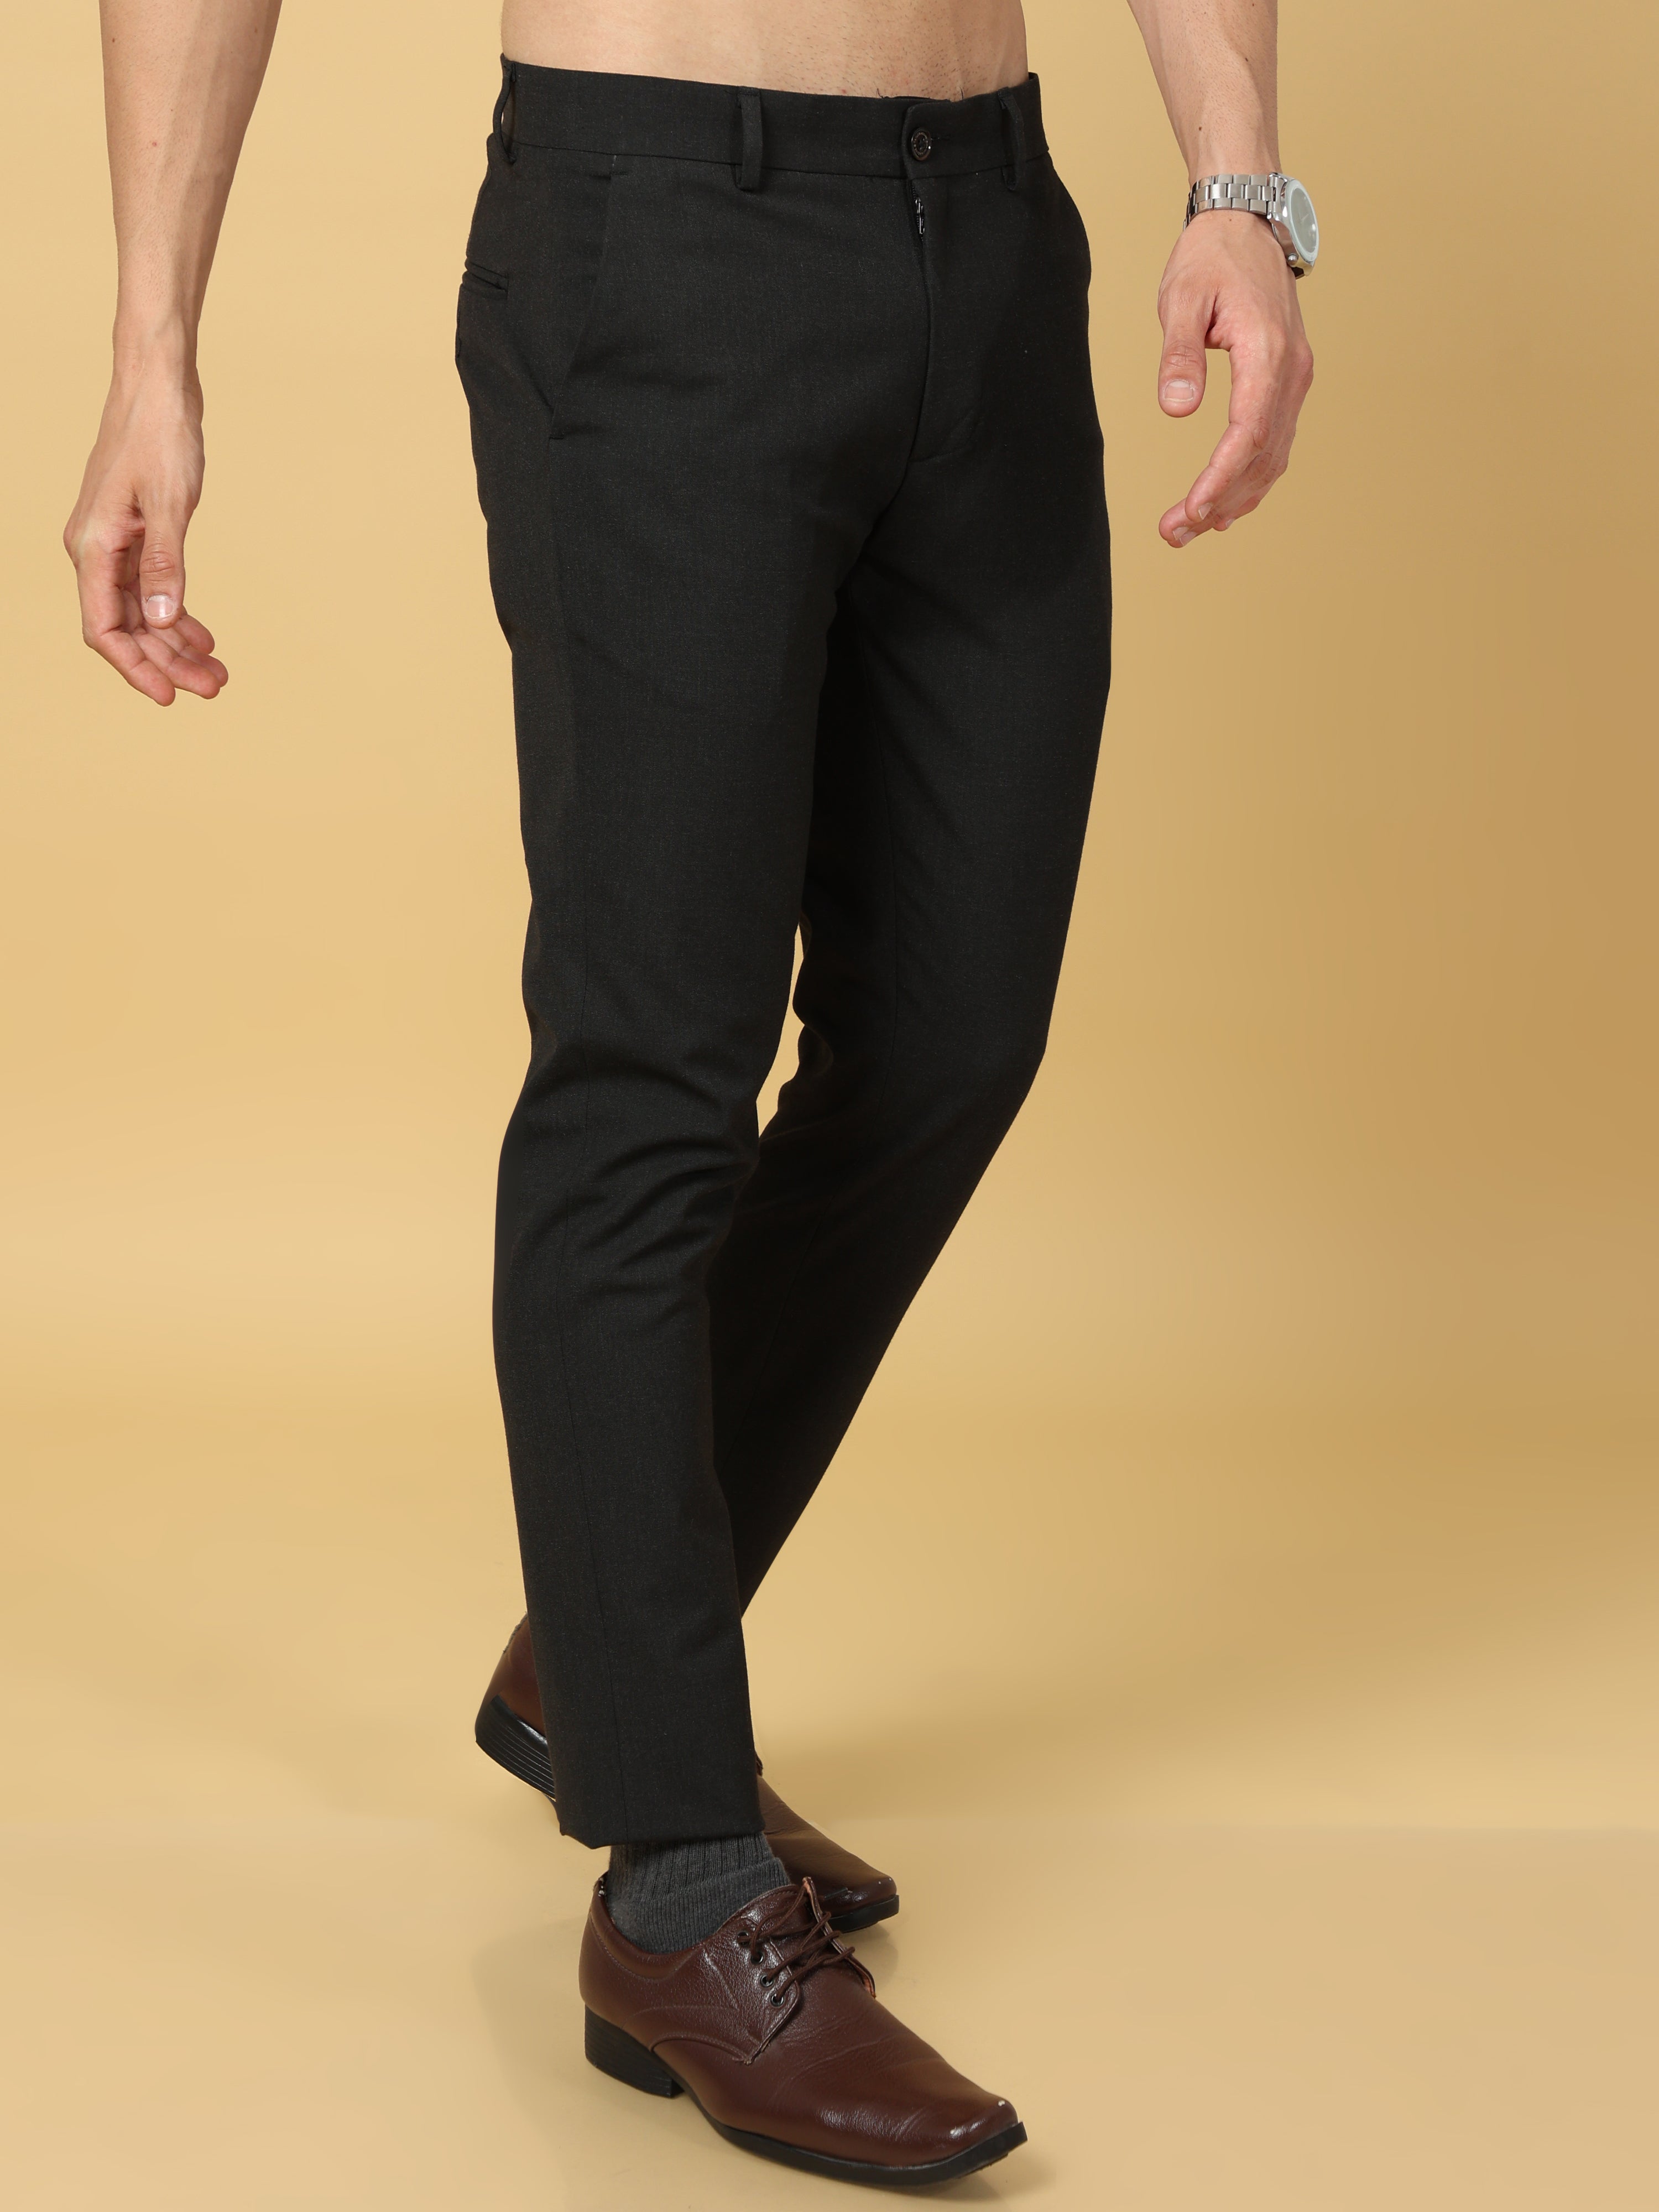 Style Hook Polyster Blend Formal Trousers For Man regular fit |formal pants  black colour |